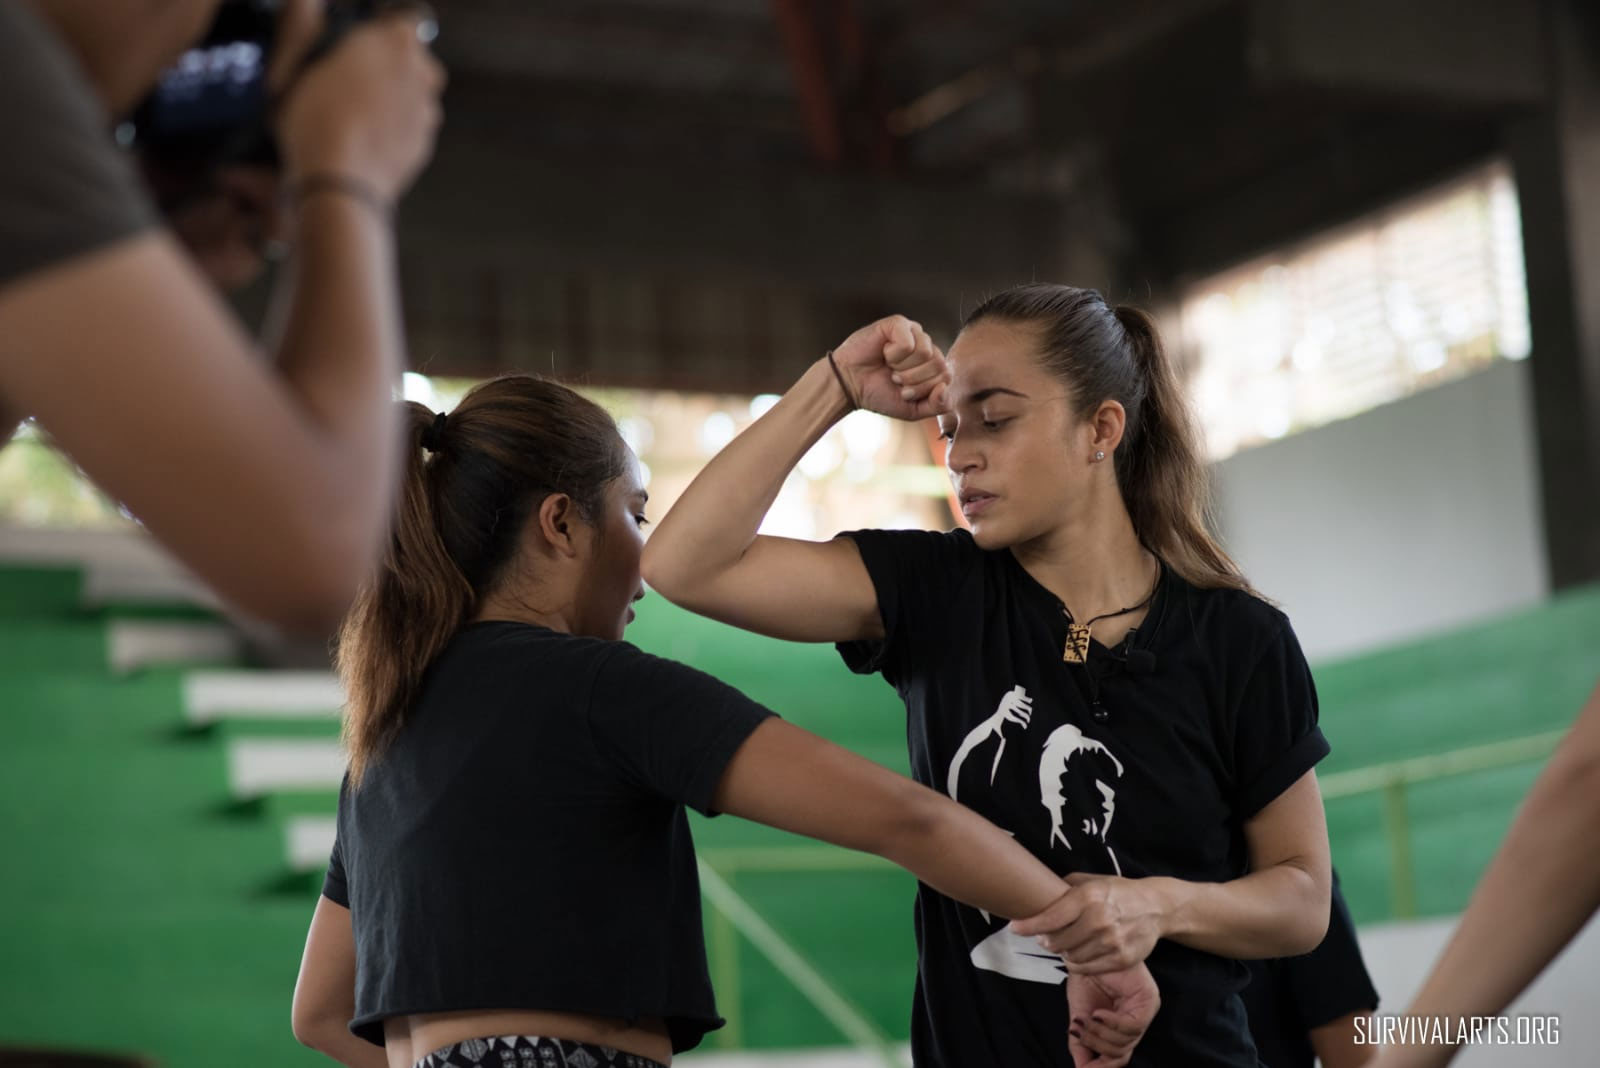 Staying Ready Despite pandemic, virtual martial arts